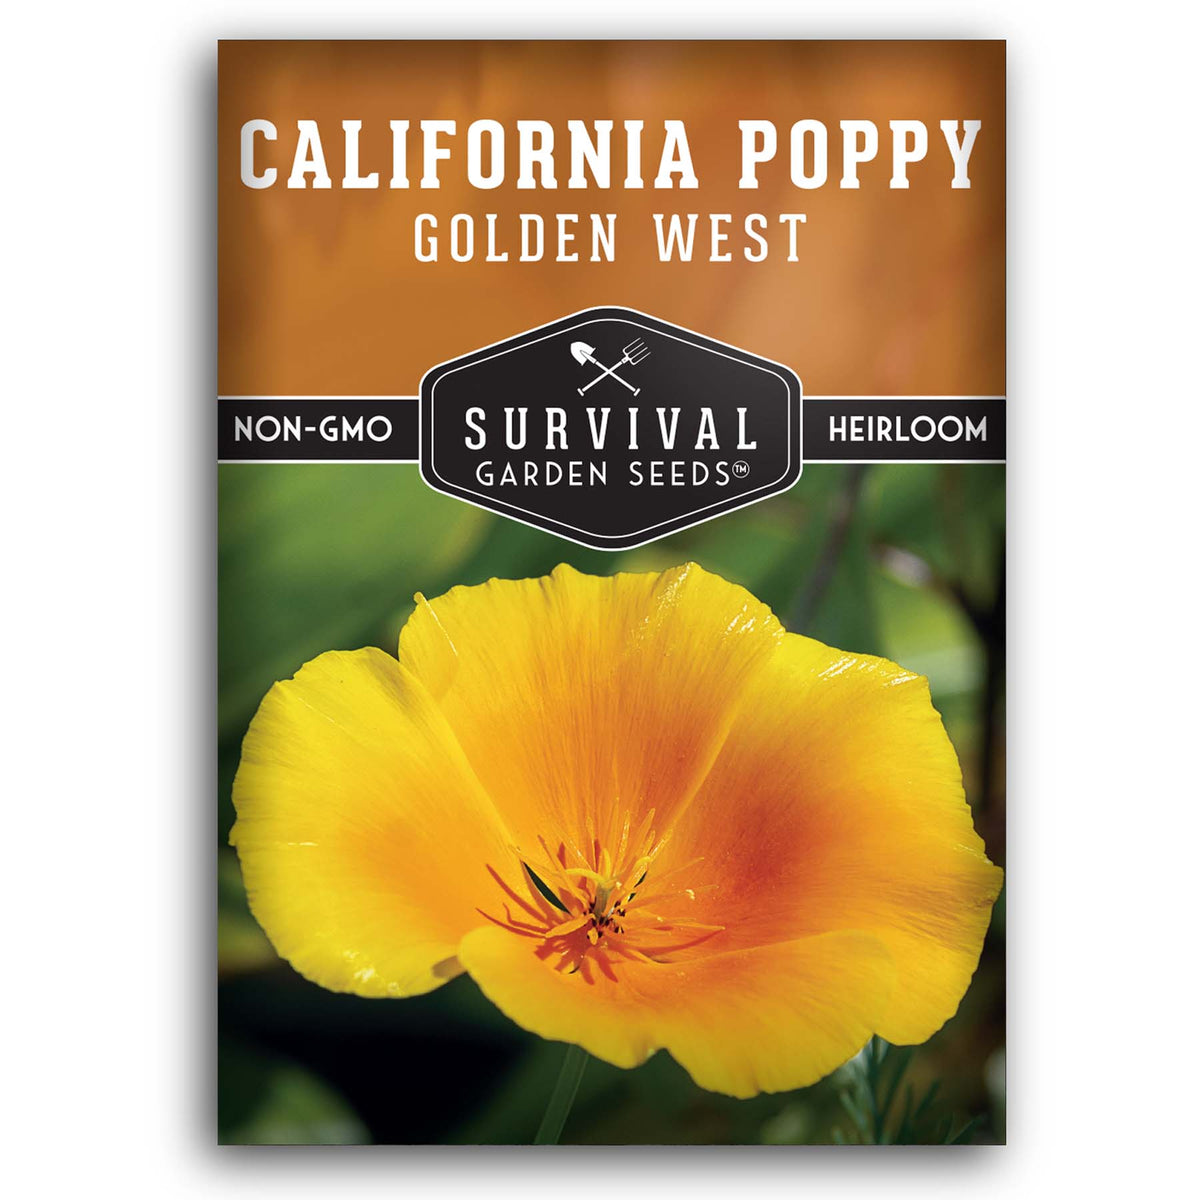 Golden West California Poppy seeds for planting